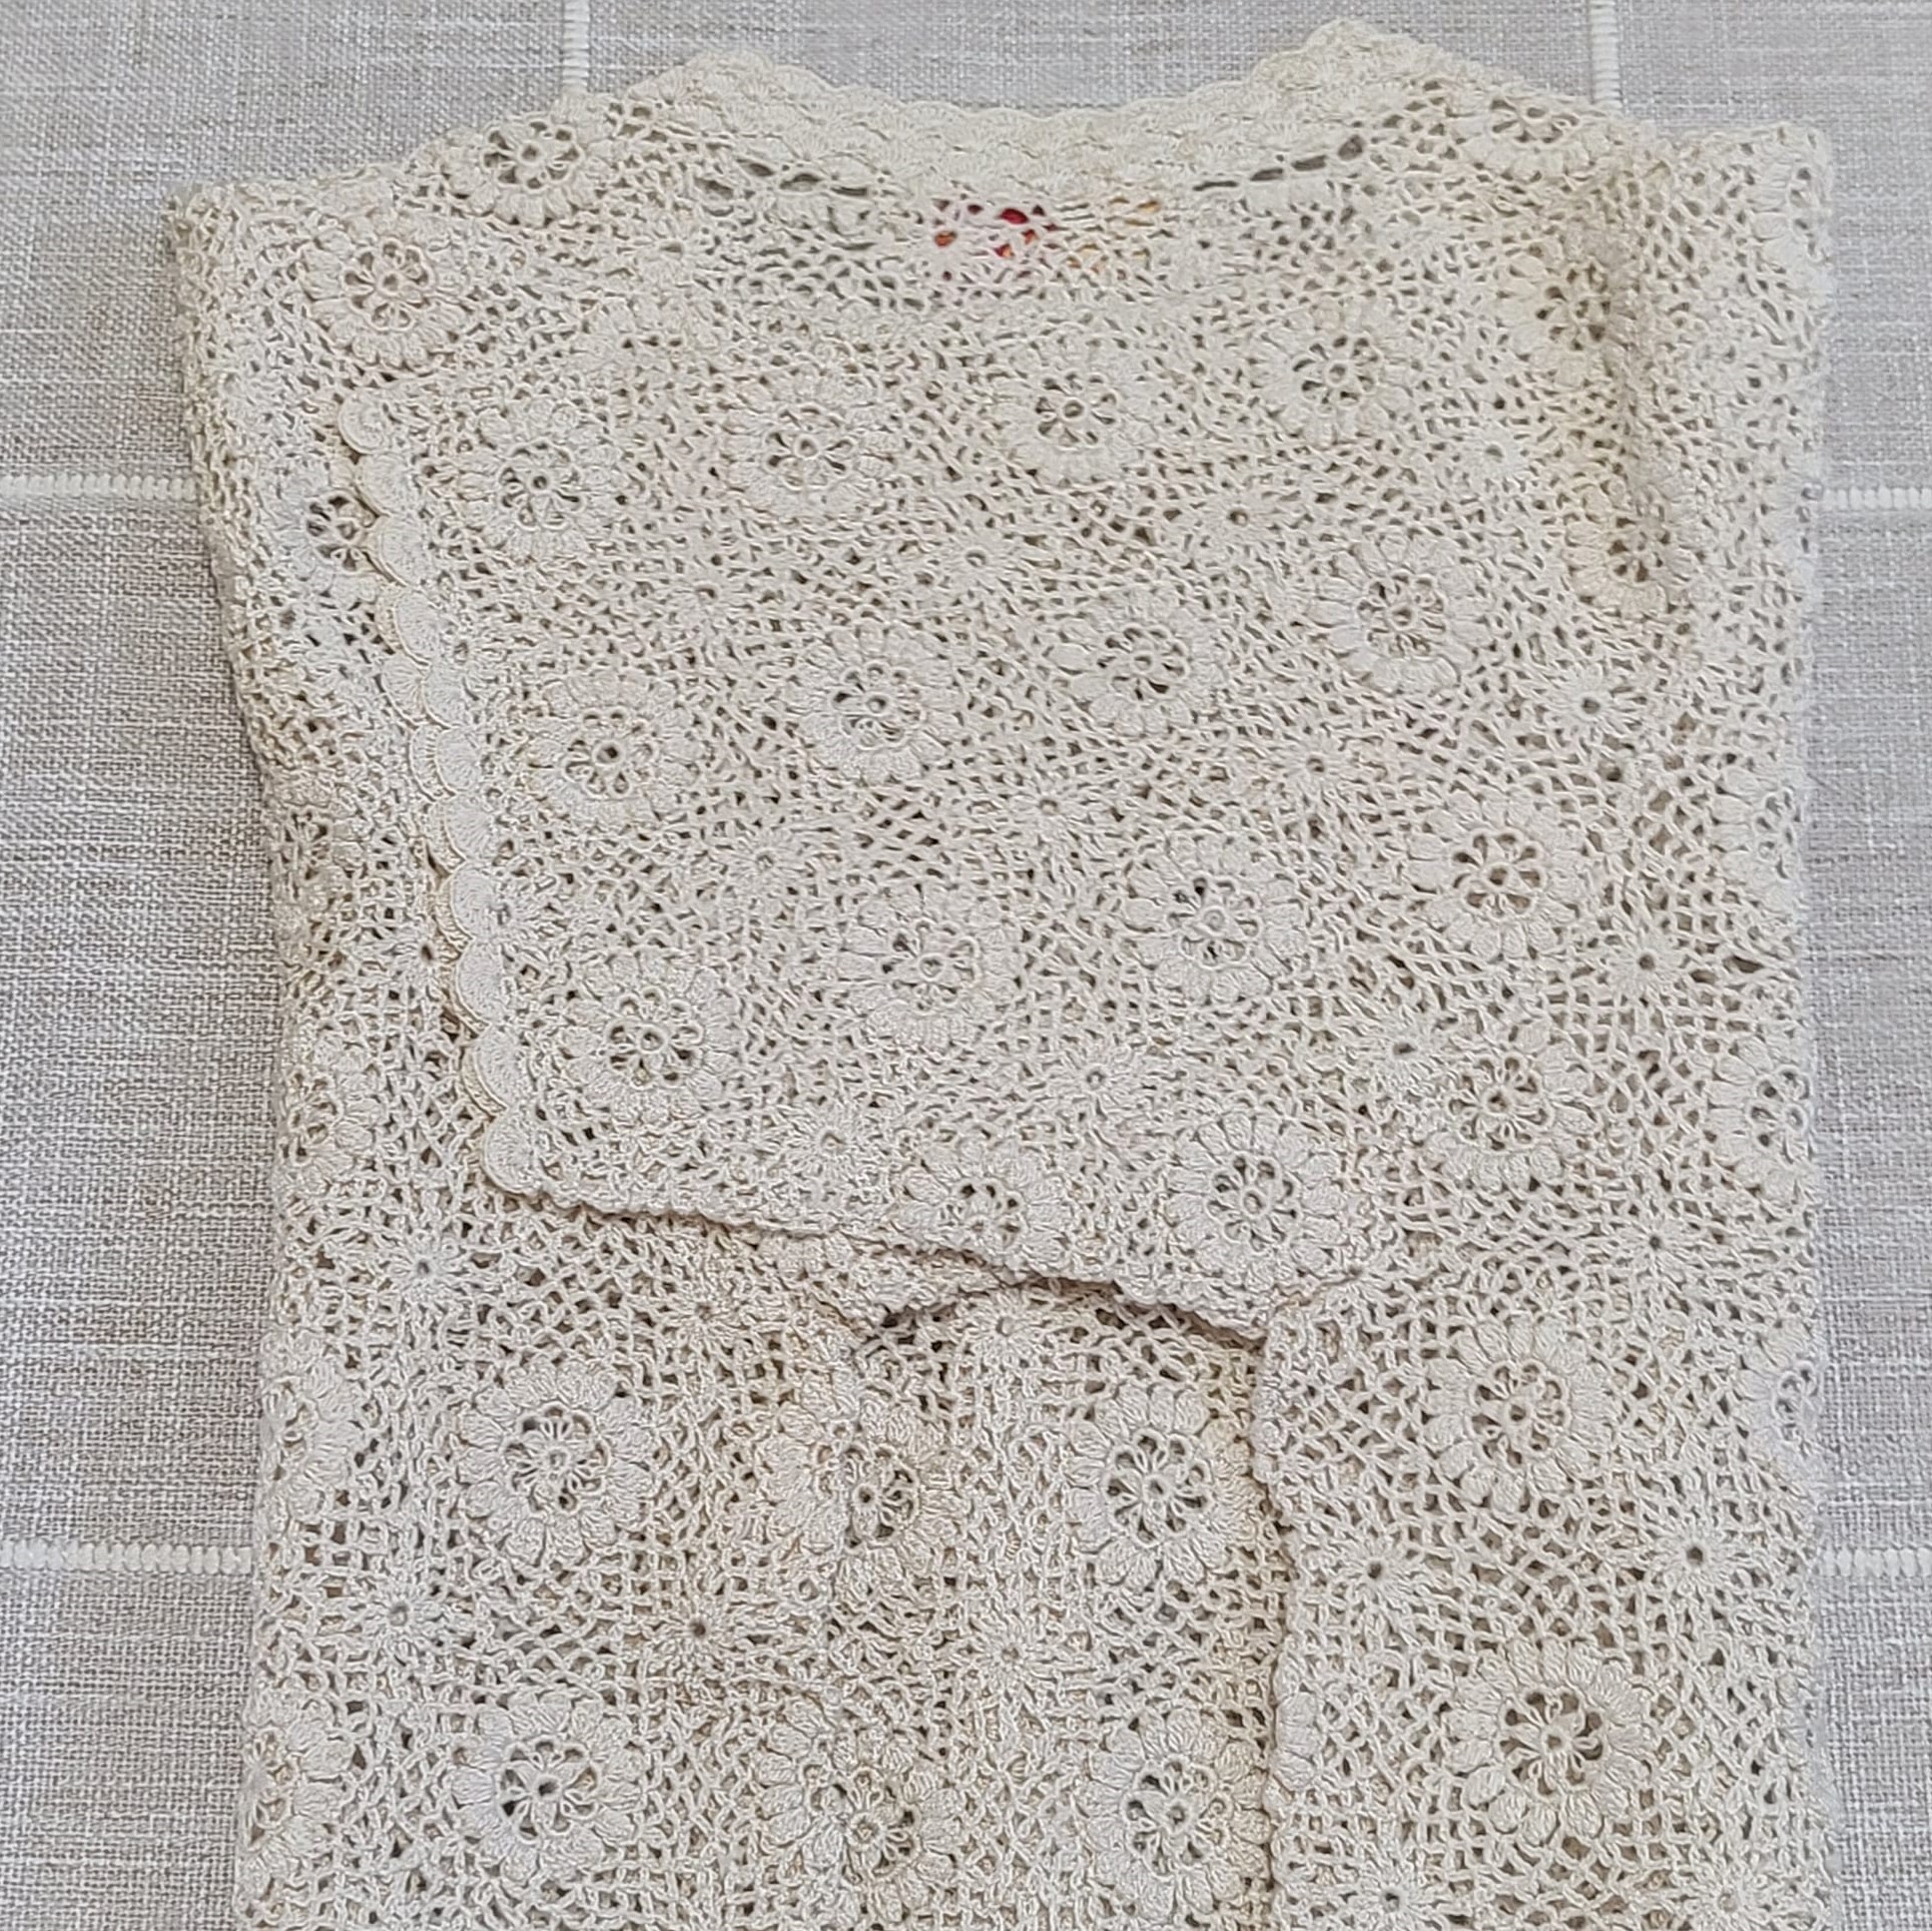 Vintage Crochet Circle Pattern Cardigan Sweater